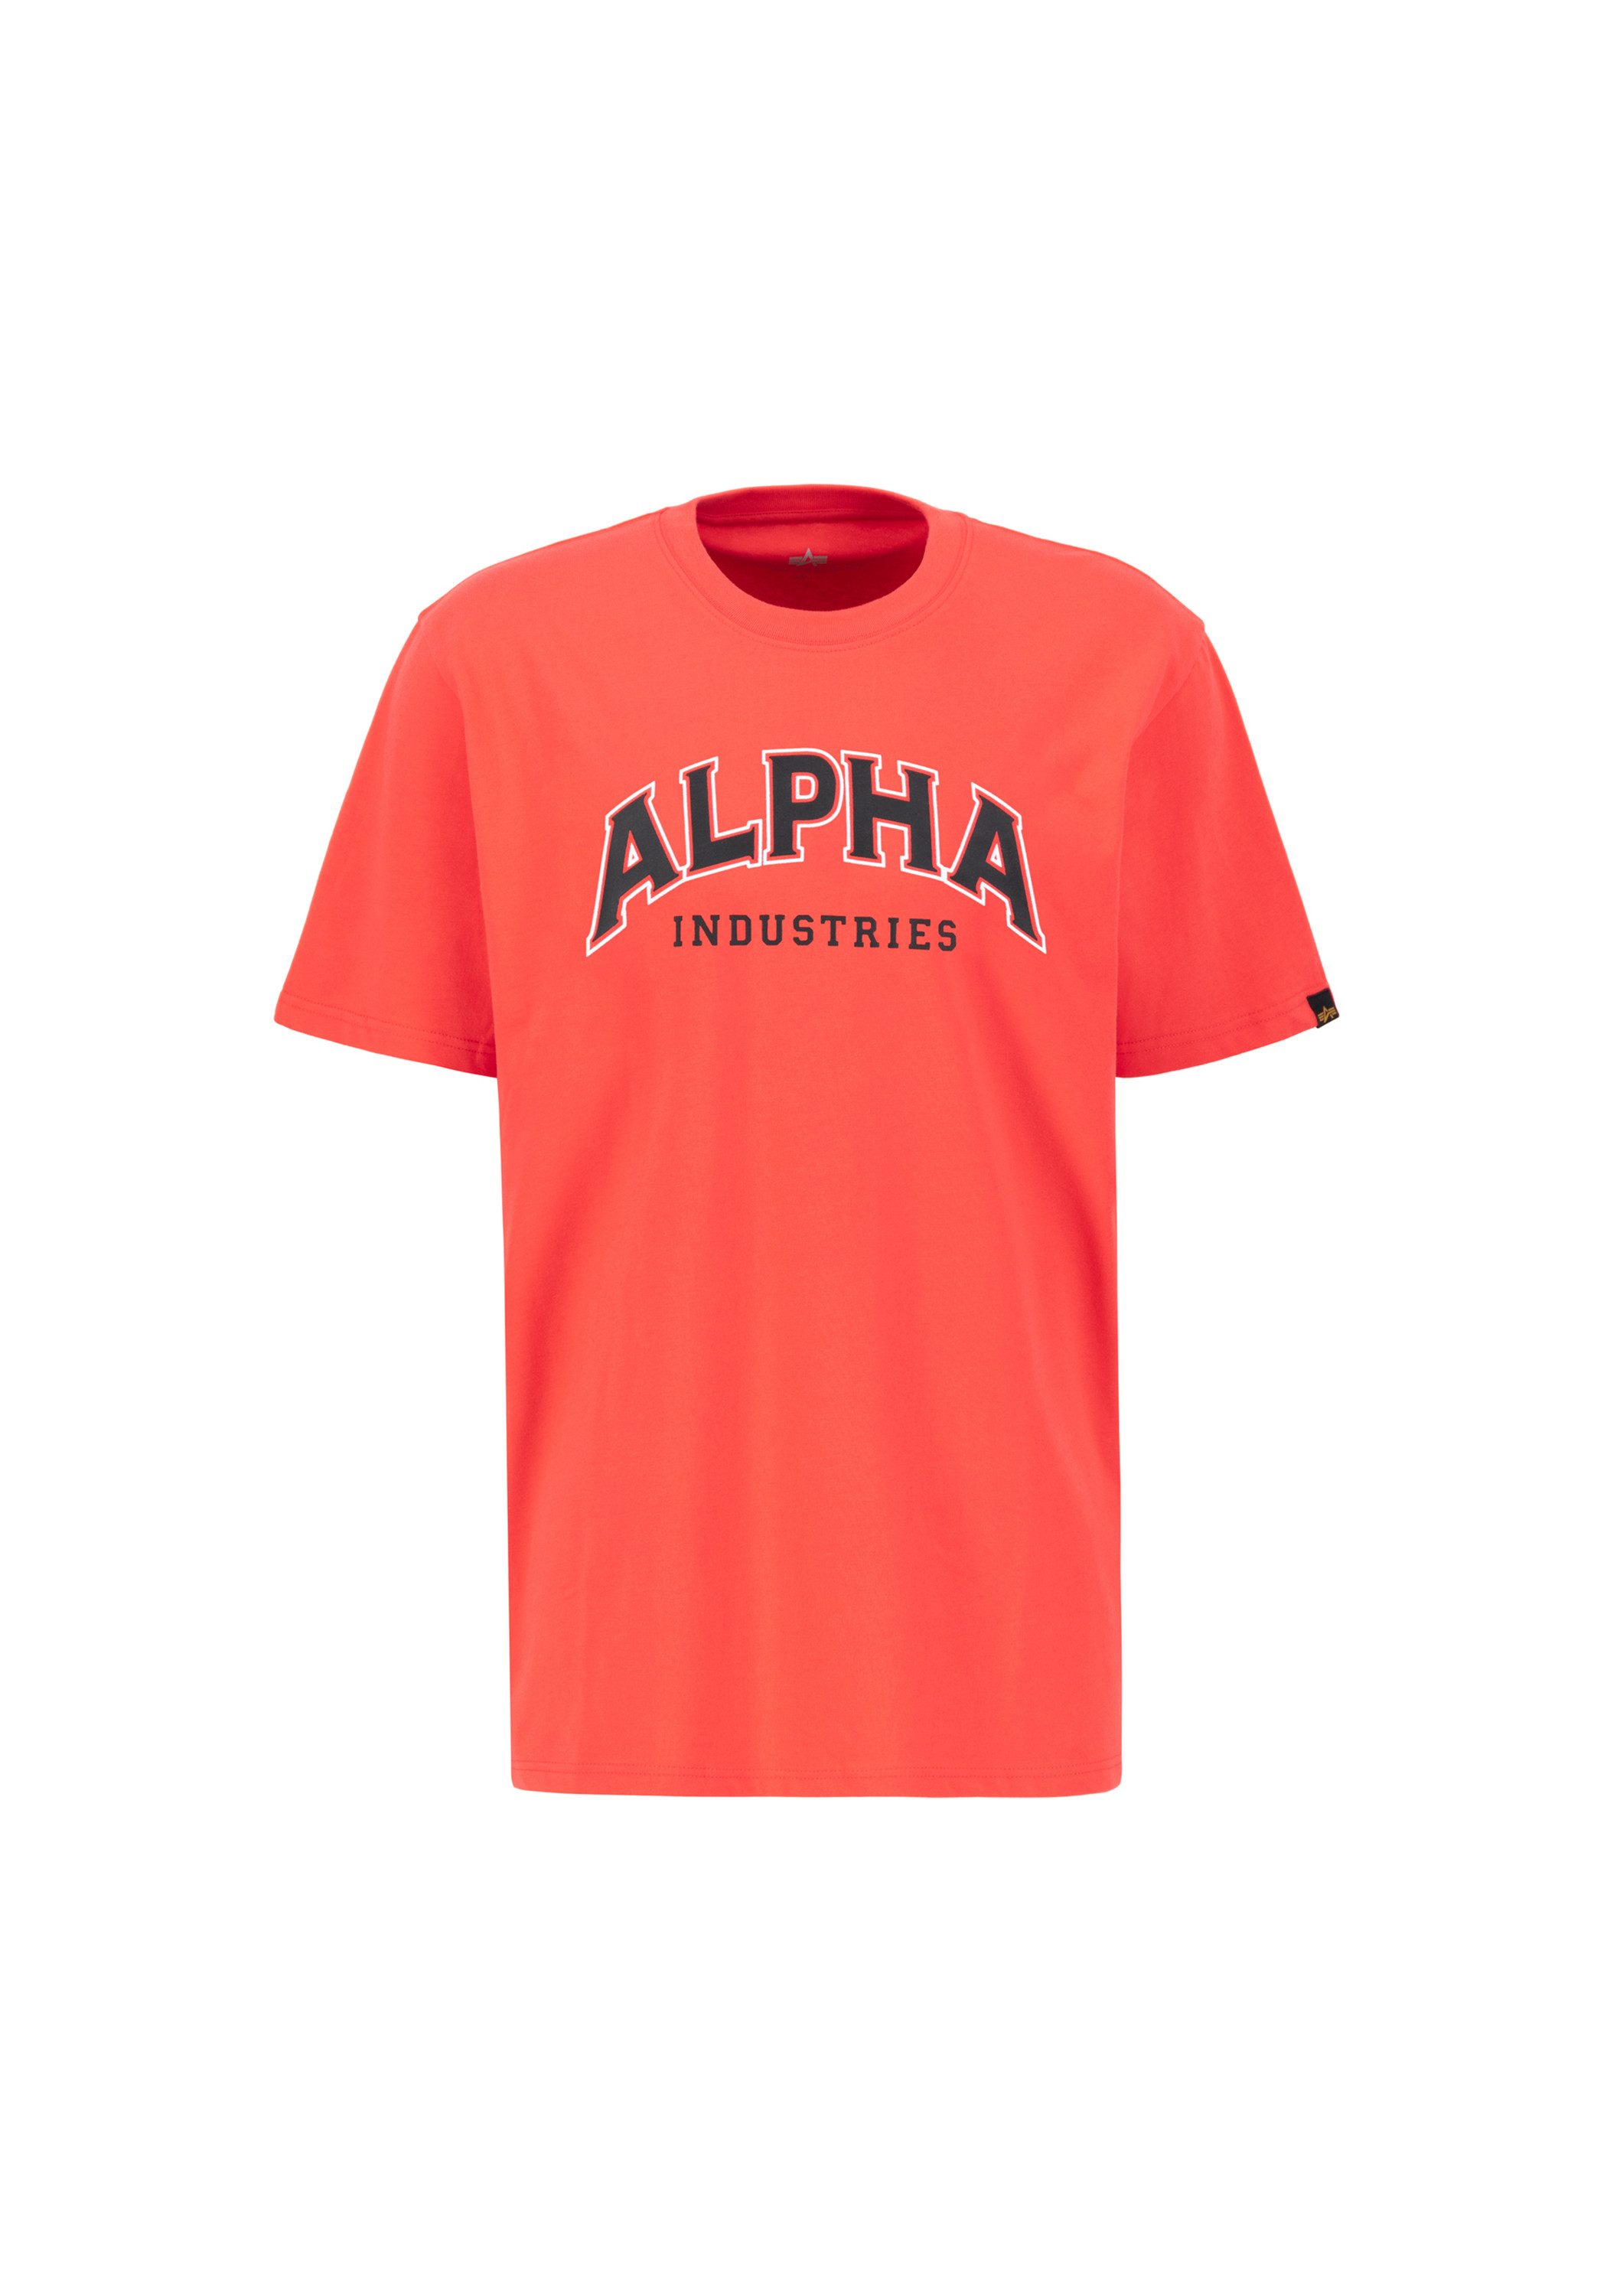 Alpha Industries T-shirt Men T-Shirts College T